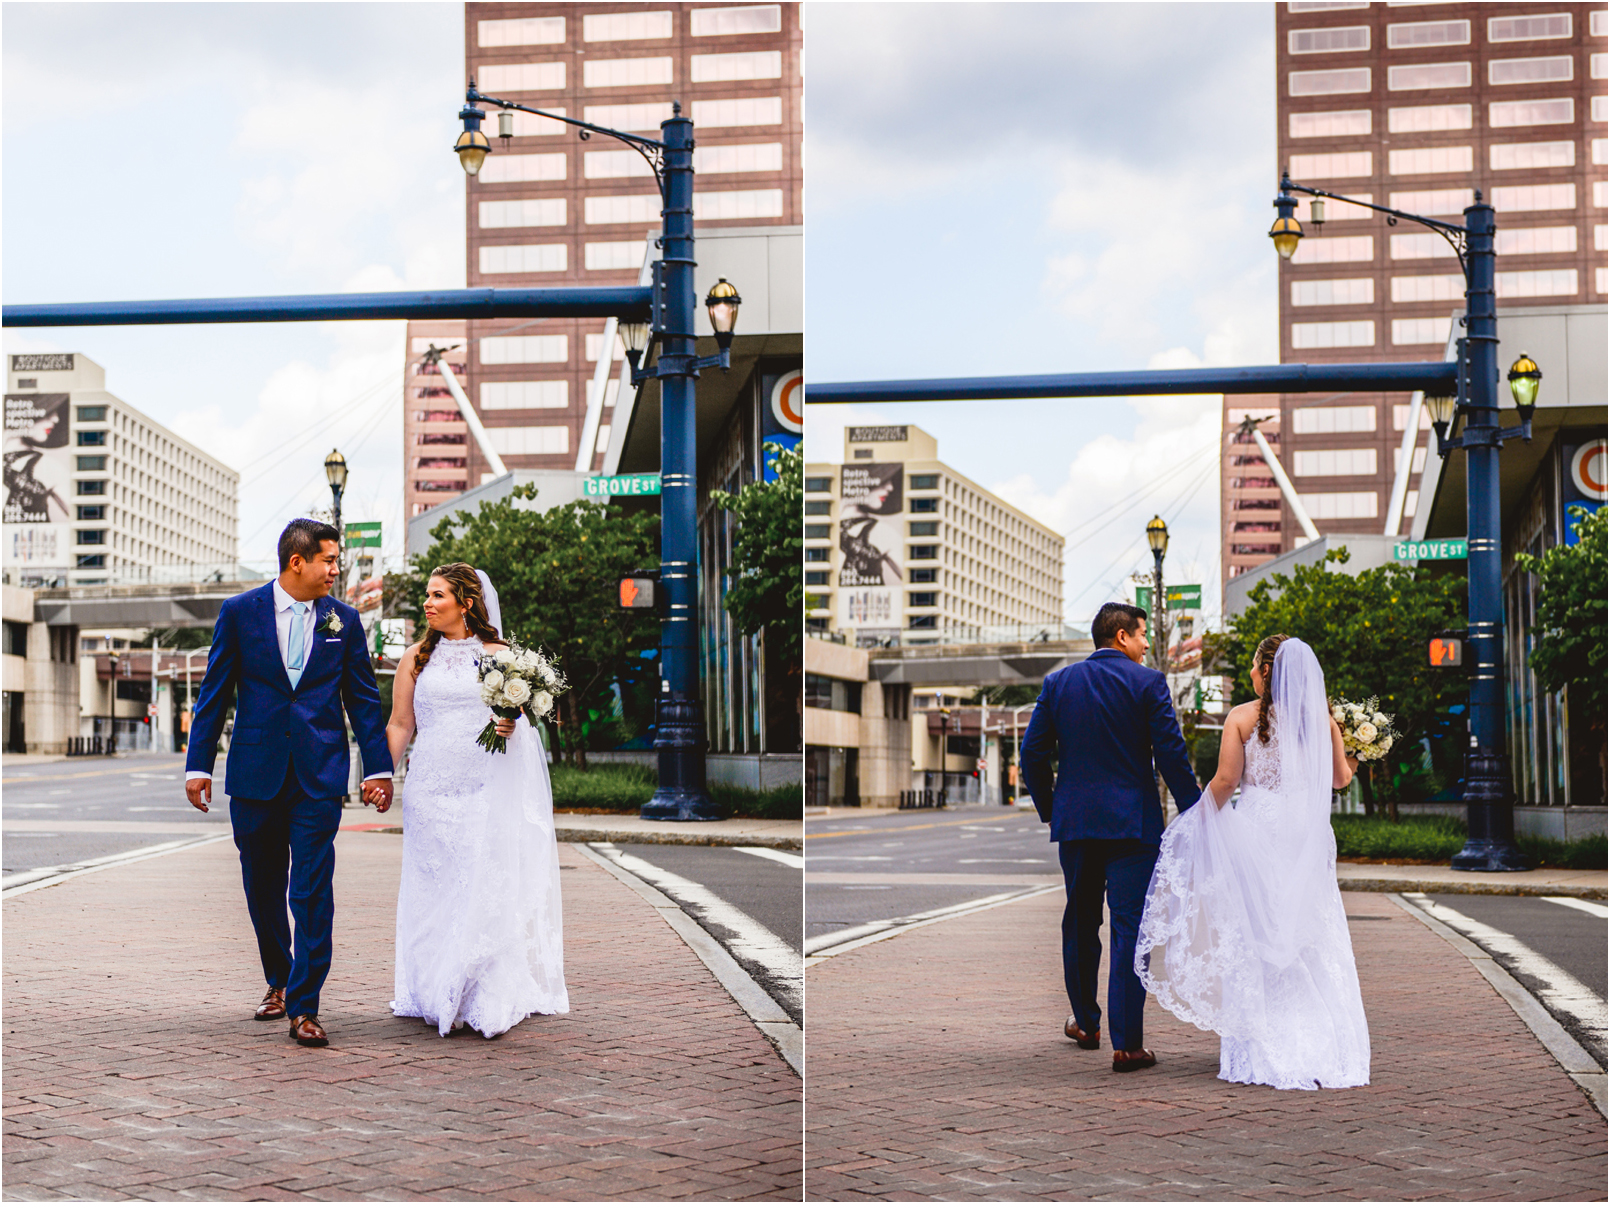 city, downtown, street, wedding, bride, groom